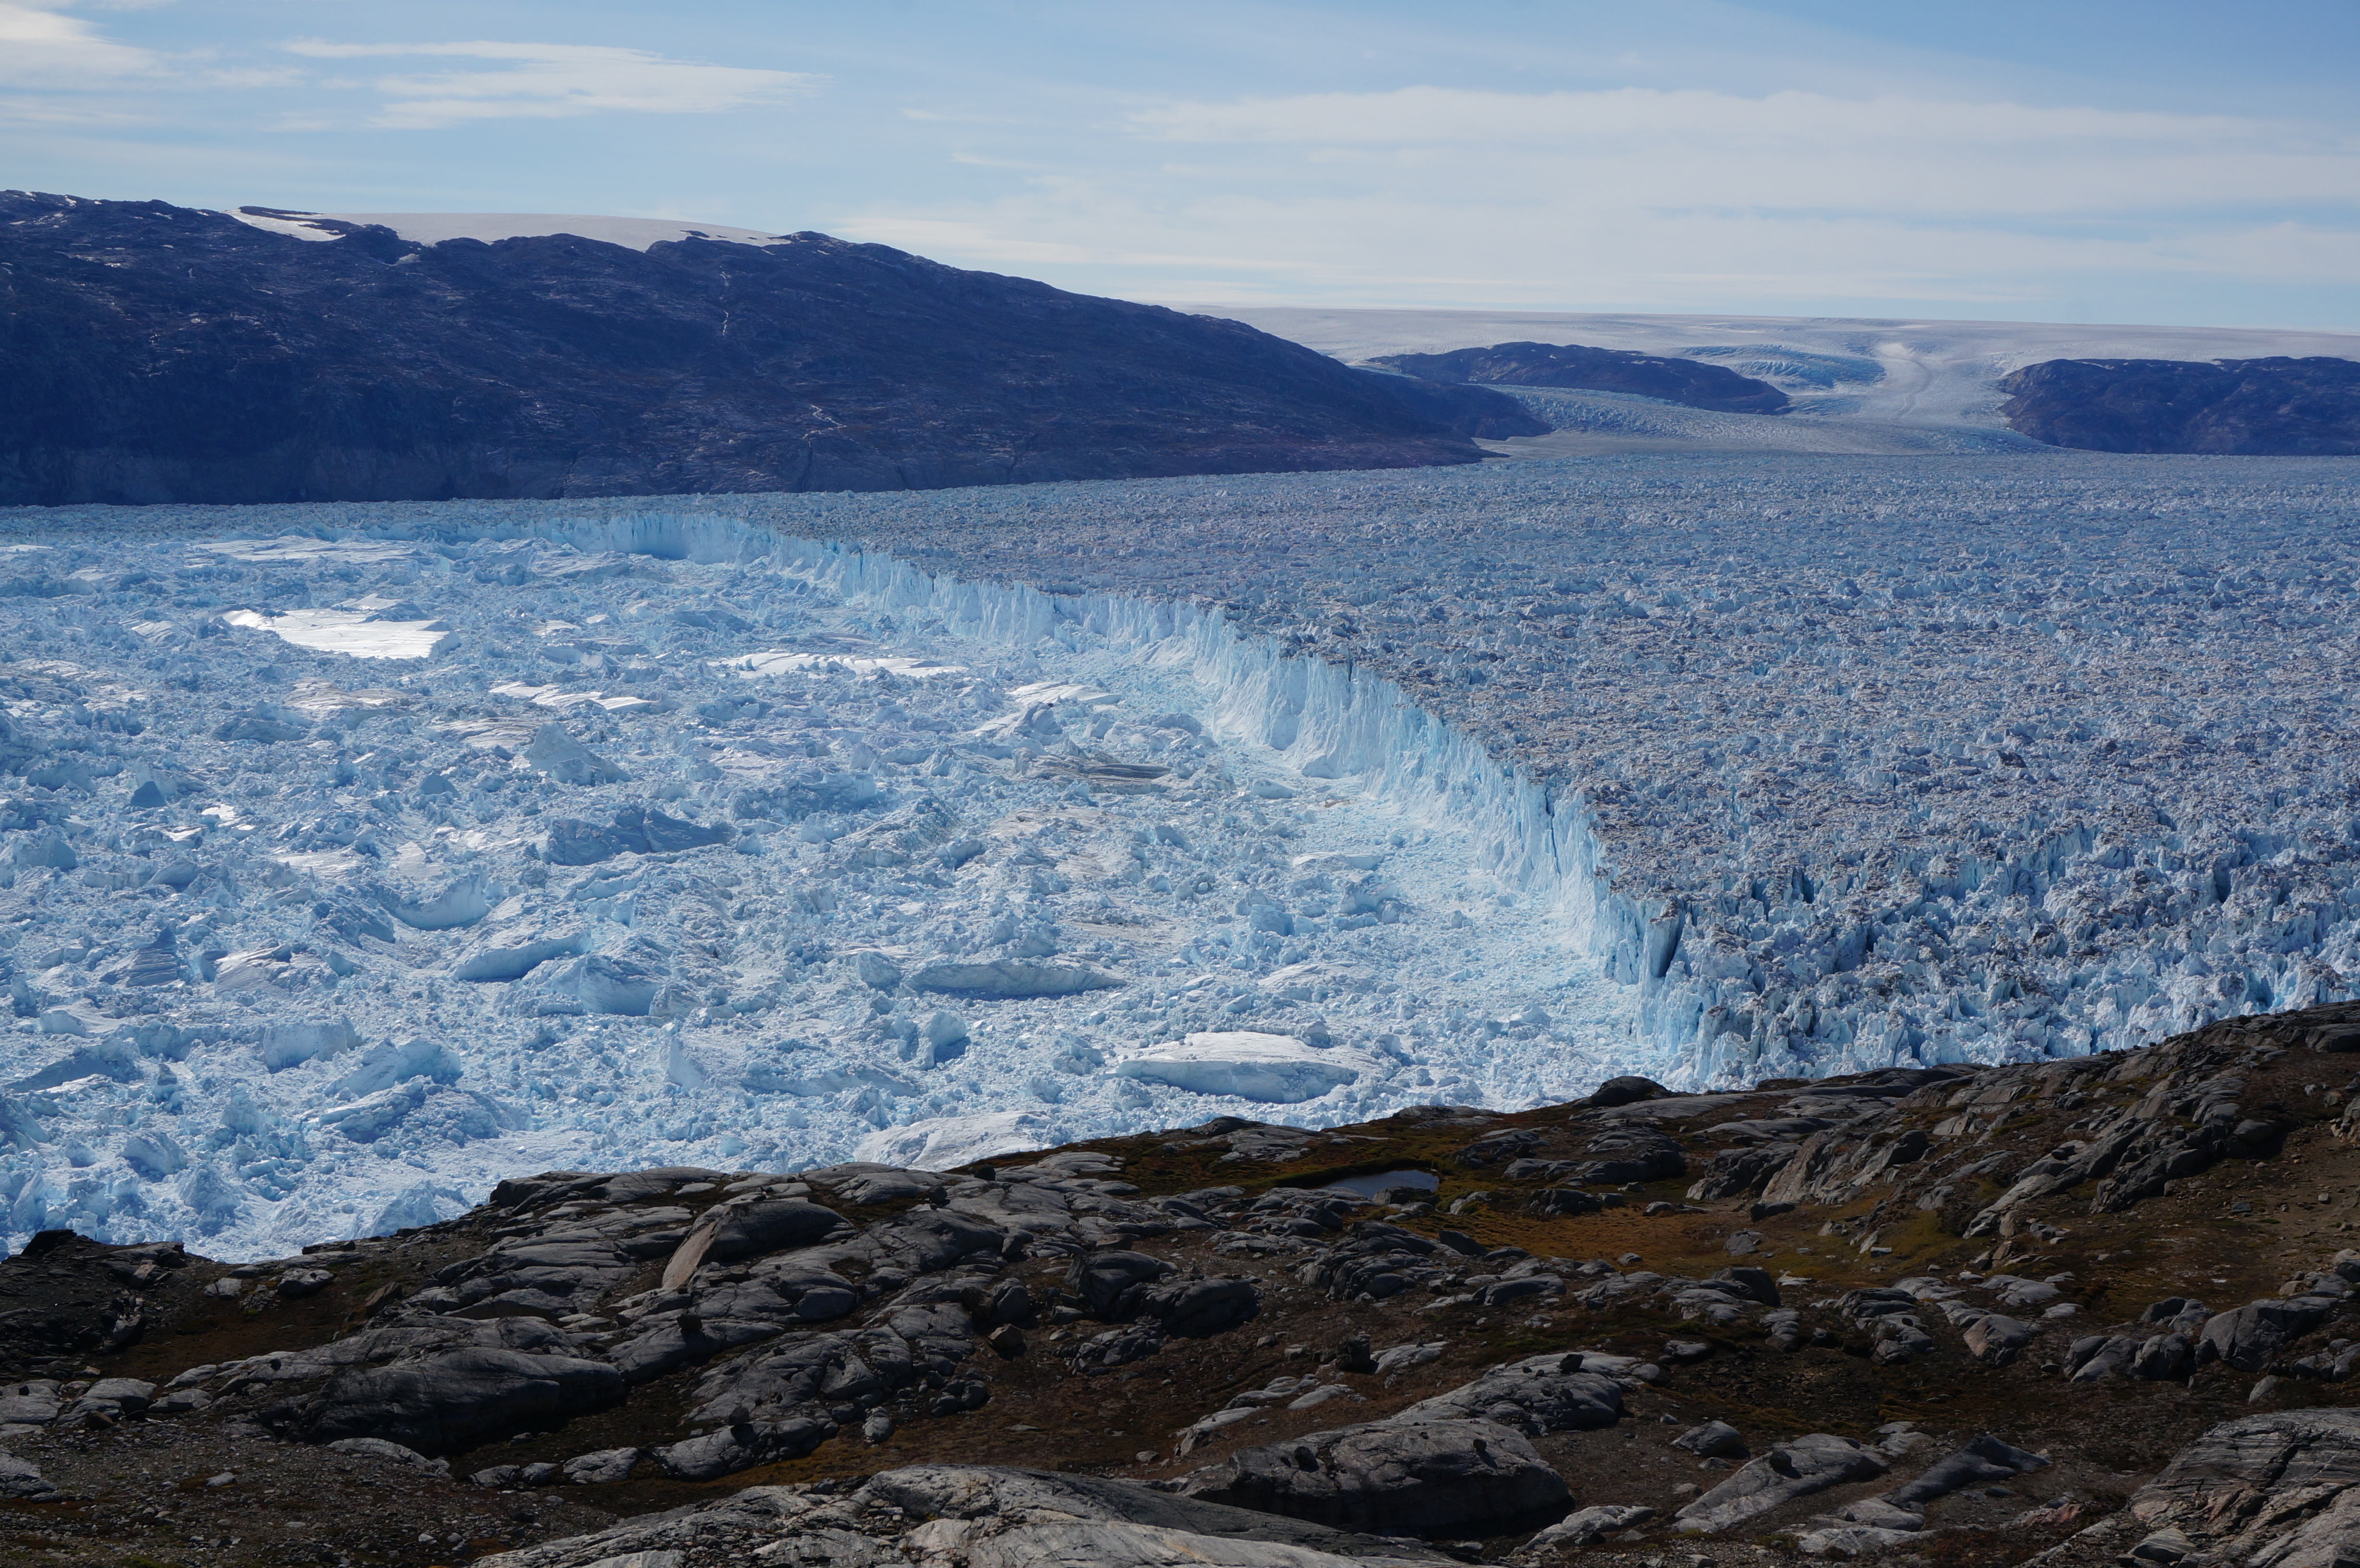 Ice cliff at the terminus of Helheim Glacier, Greenland in August 2014. Credit: Knut Christianson